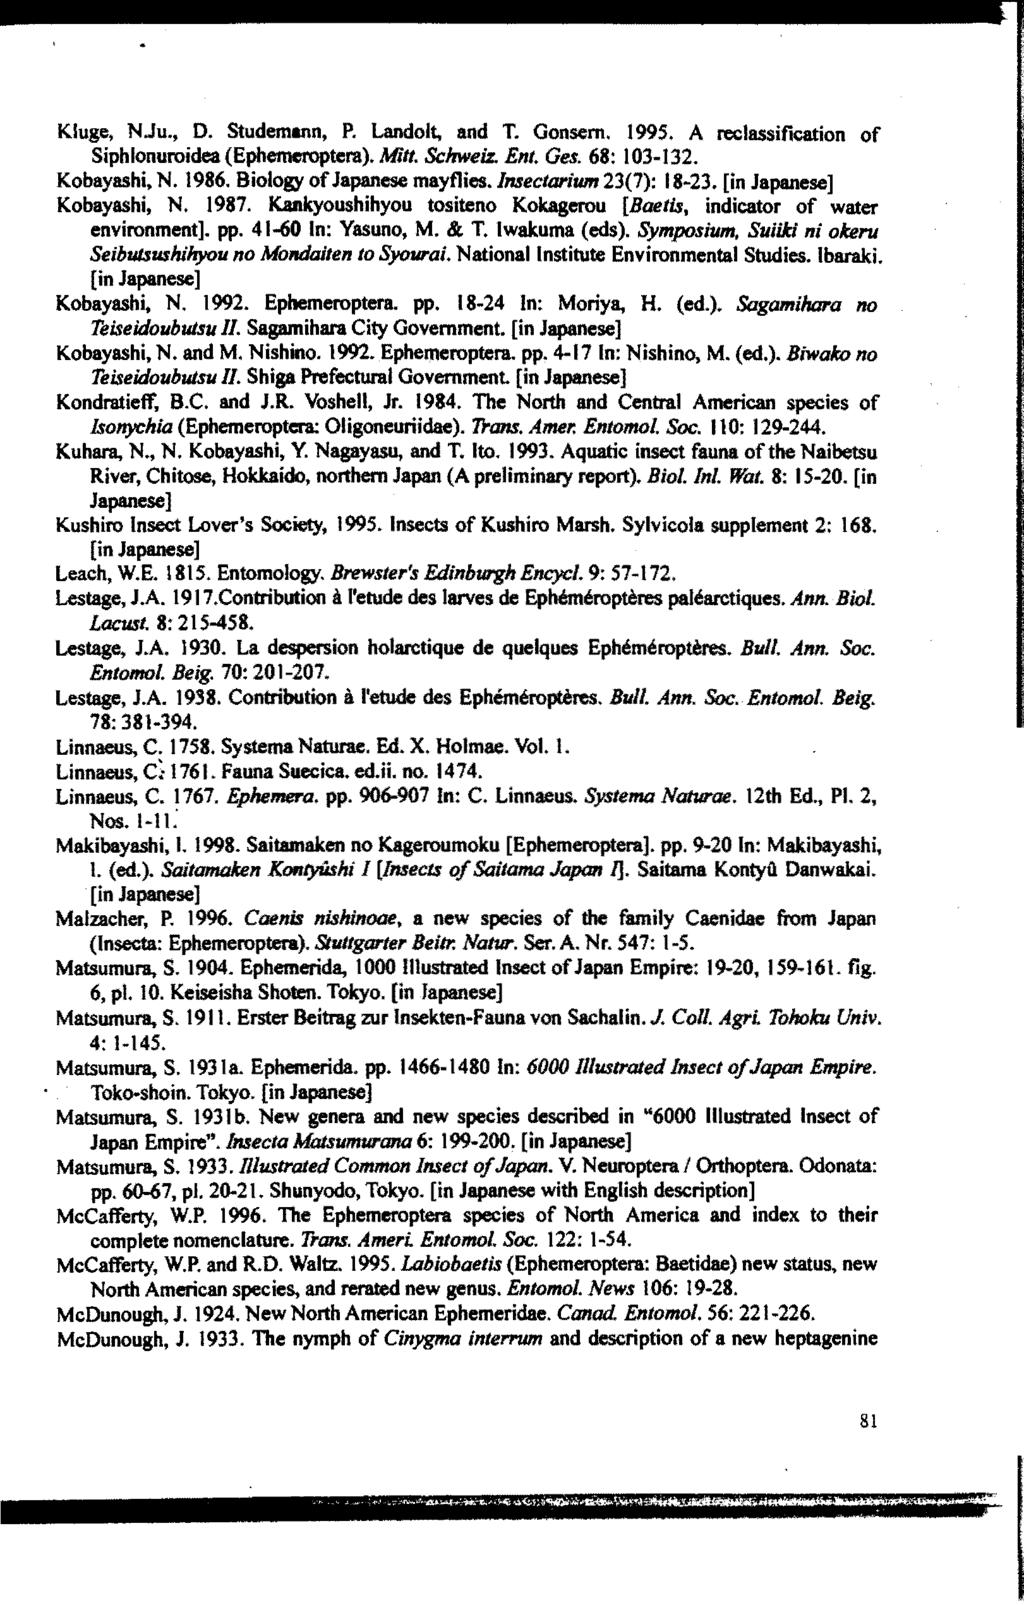 Kluge, NJu., D. Studemann, P. Landolt, and T. Gonsem. 1995. A reclassification of Siphlonuroidea(Ephemeroptera). Mitt. Schweiz. Ent. Ges. 68: 103-132. Kobayashi, N. 1986. Biology of Japanese mayflies.